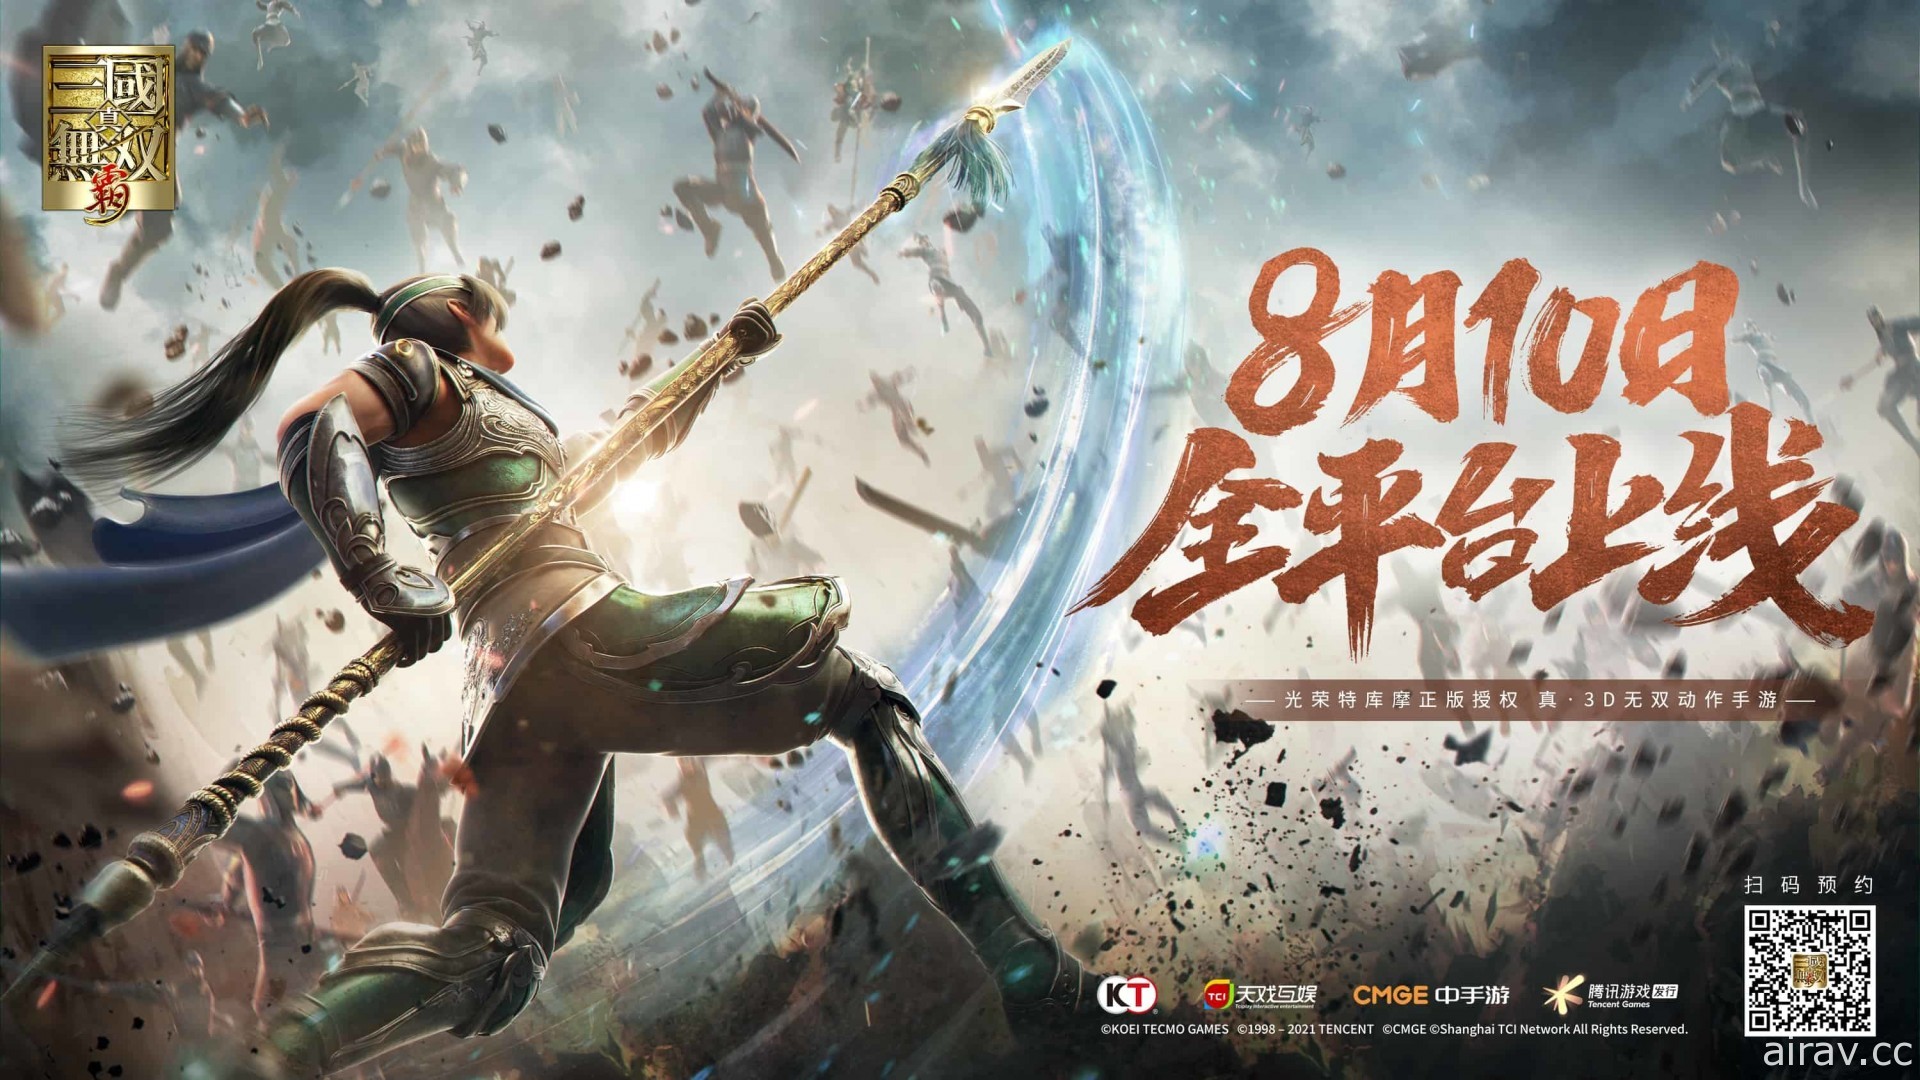 【CJ 21】《真・三國無雙 霸》8 月 10 日於中國推出 公開電影式 CG 預告影片